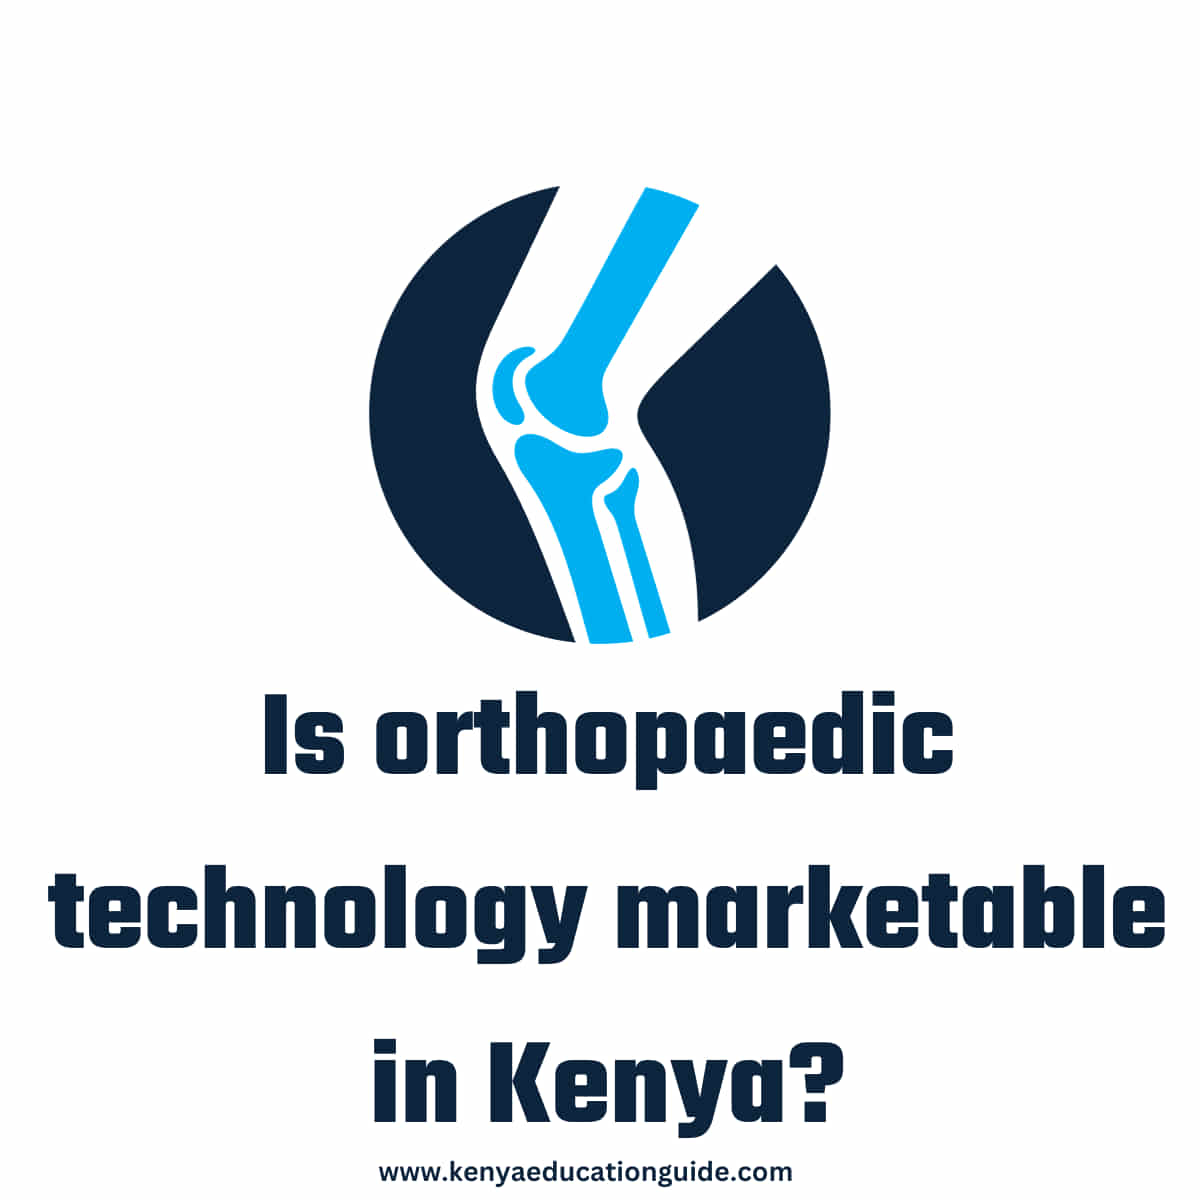 Is orthopaedic technology marketable in Kenya?